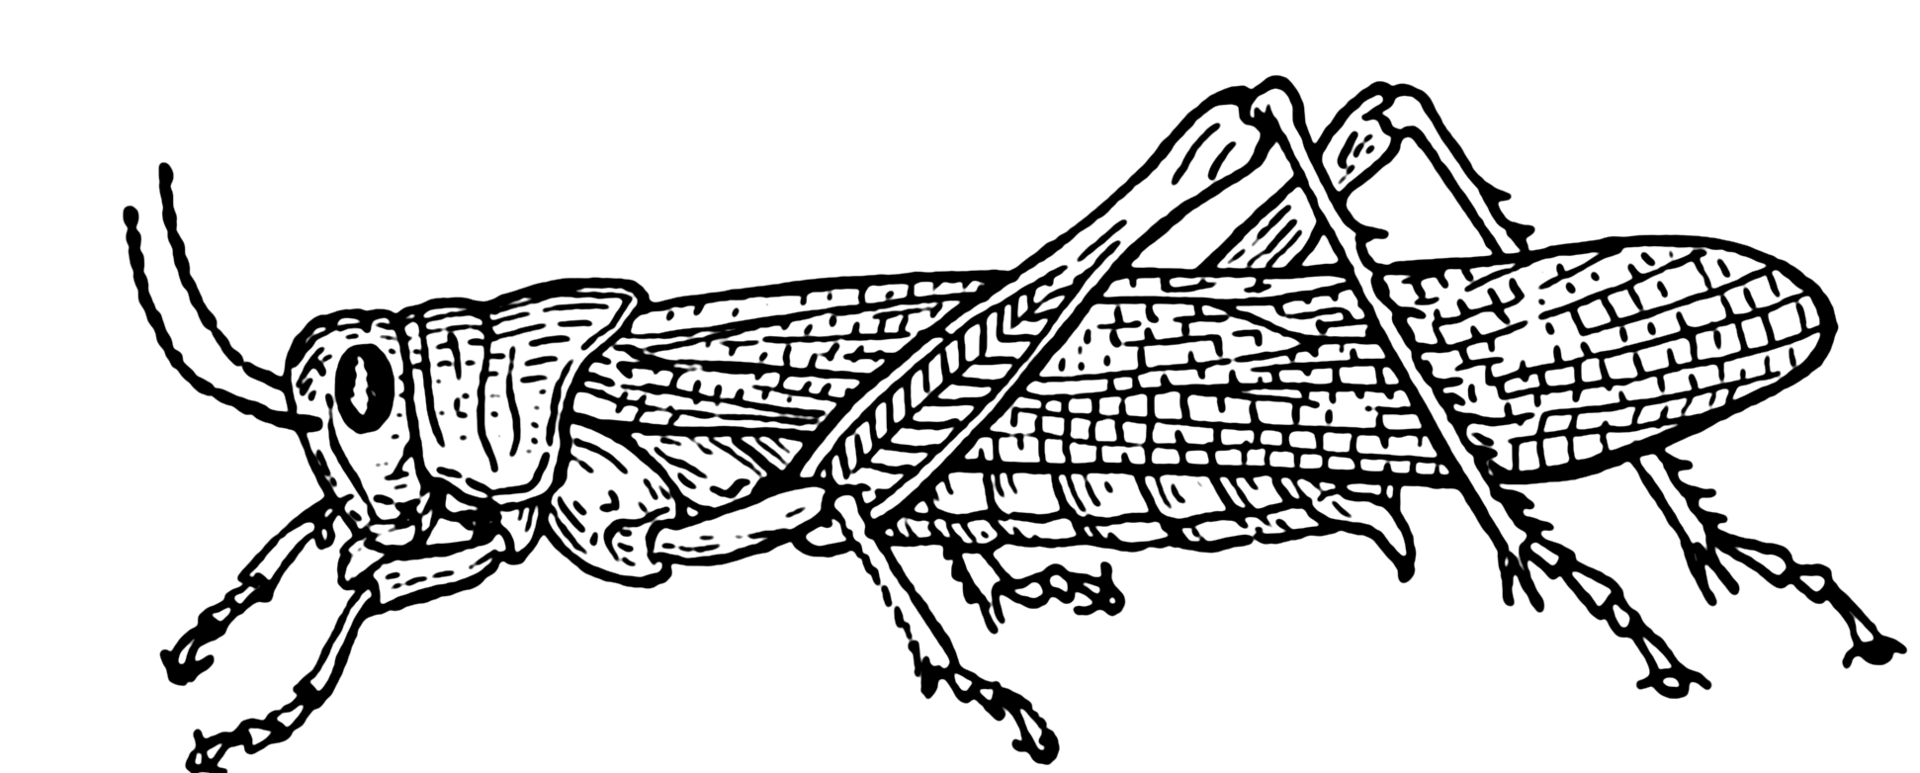 Grasshopper Sketch